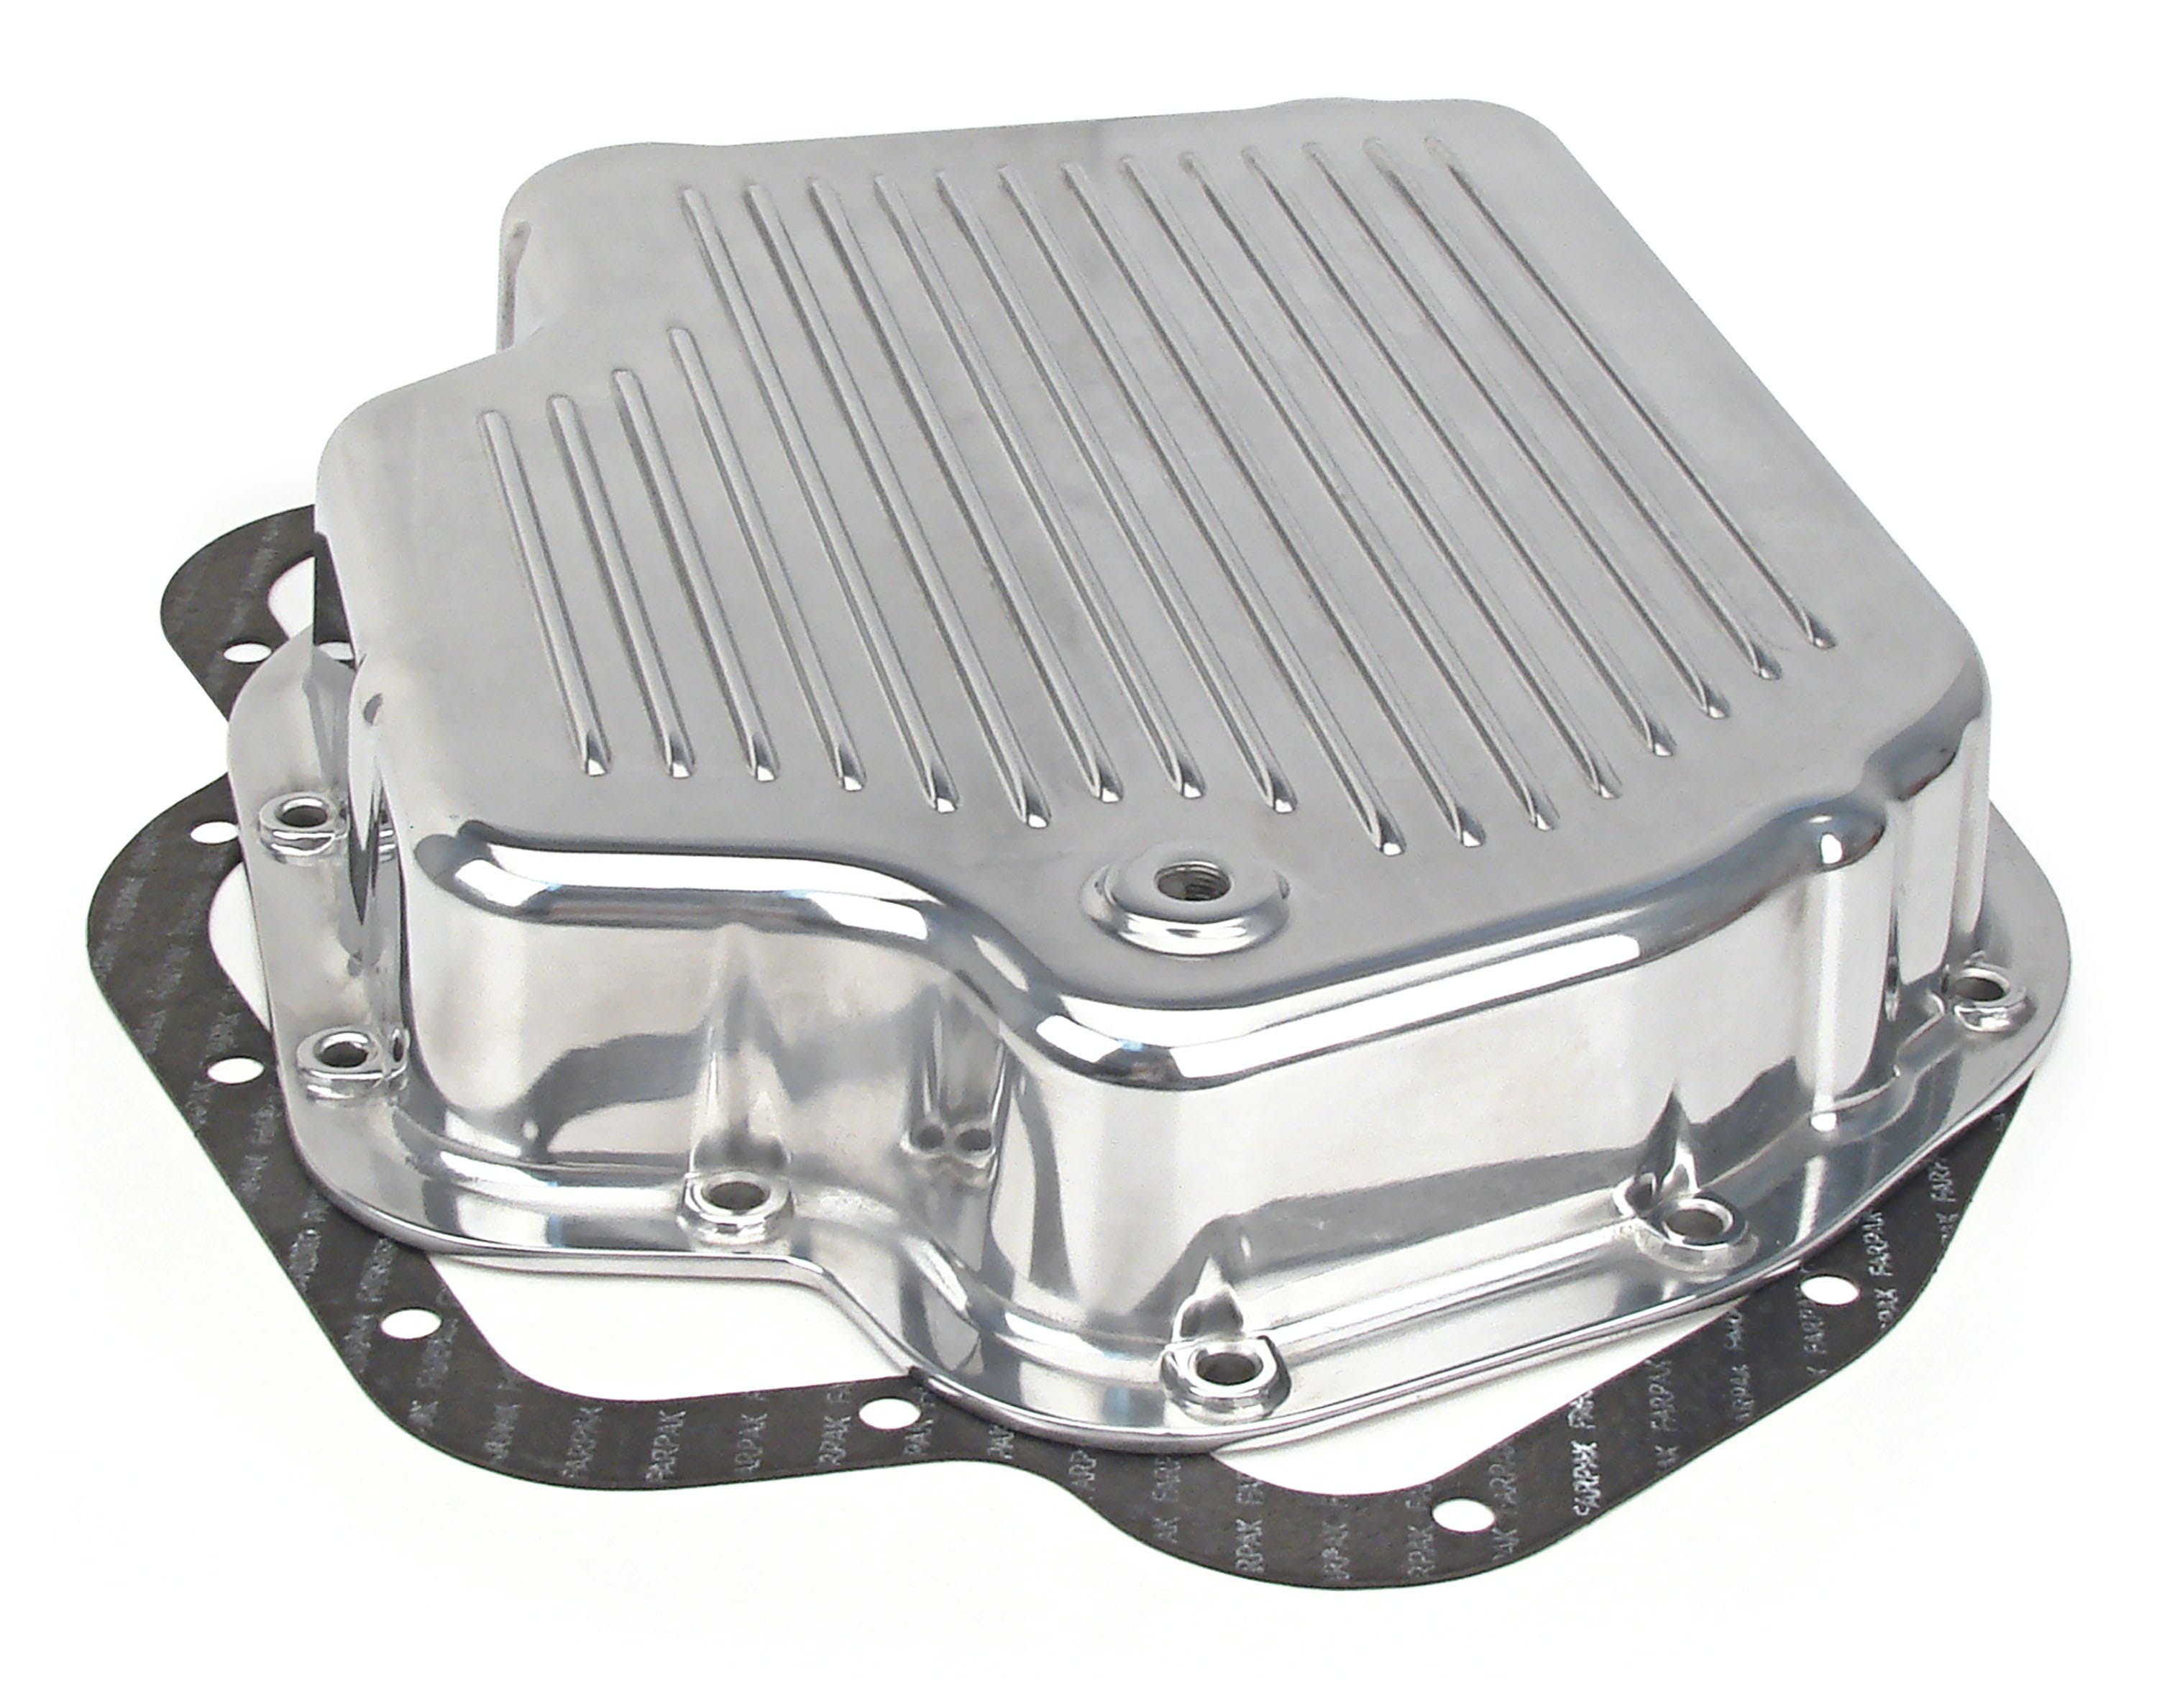 TCI Automotive 228010 GM TH400 Polished Die Cast Aluminum Pan (Stock Depth)